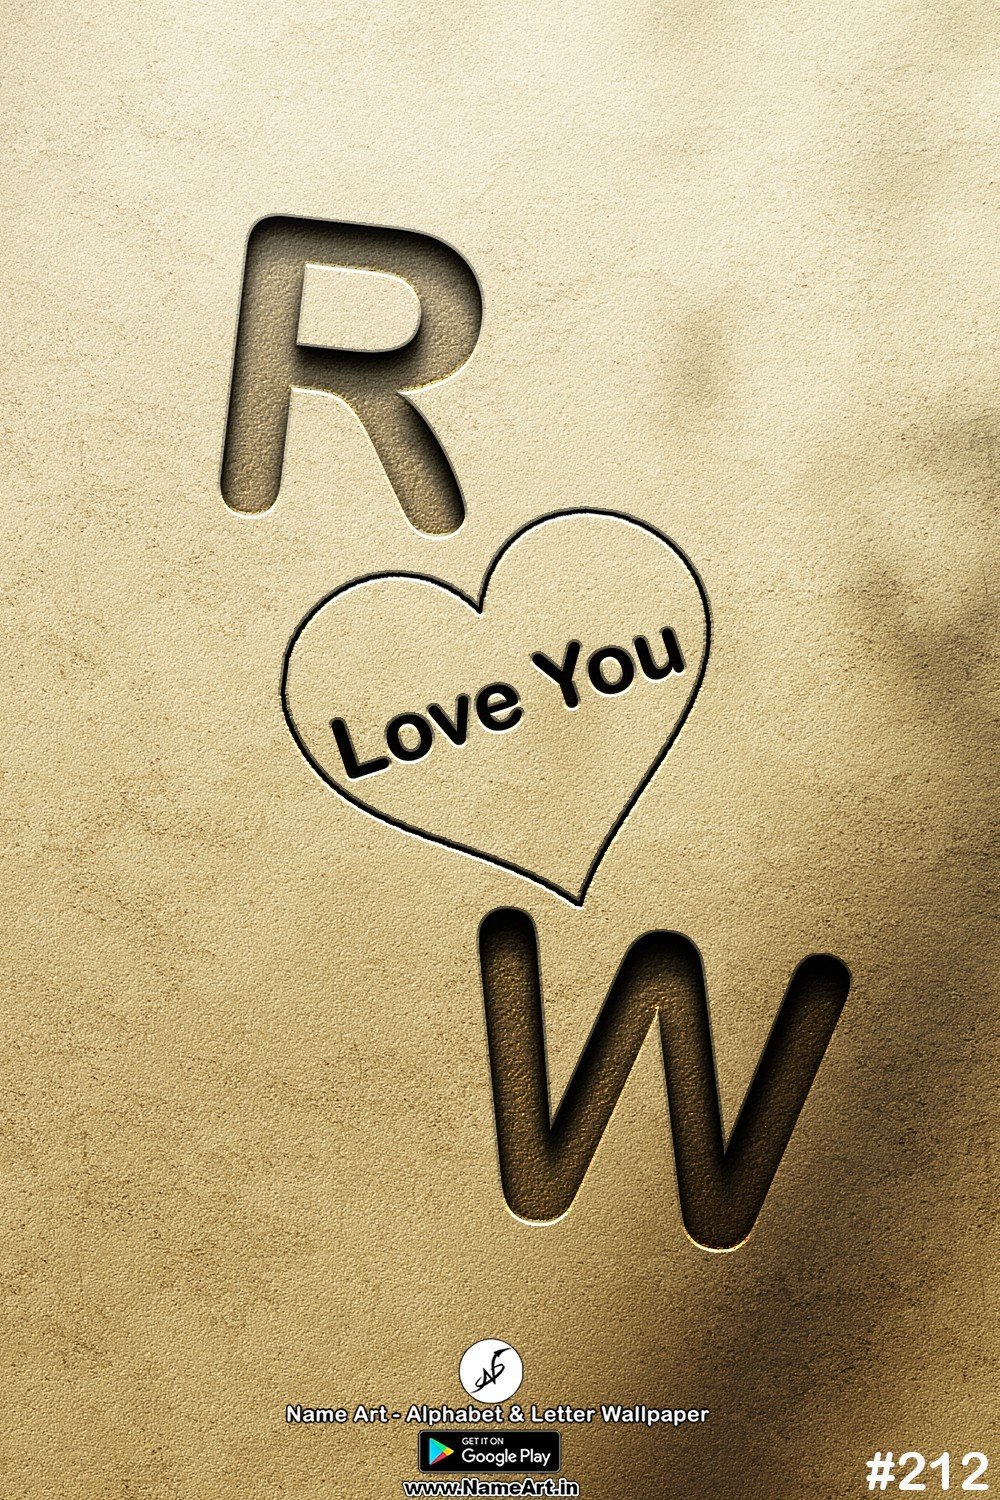 RW | Whatsapp Status DP RW | RW Love Status Cute Couple Whatsapp Status DP !! | New Whatsapp Status DP RW Images |